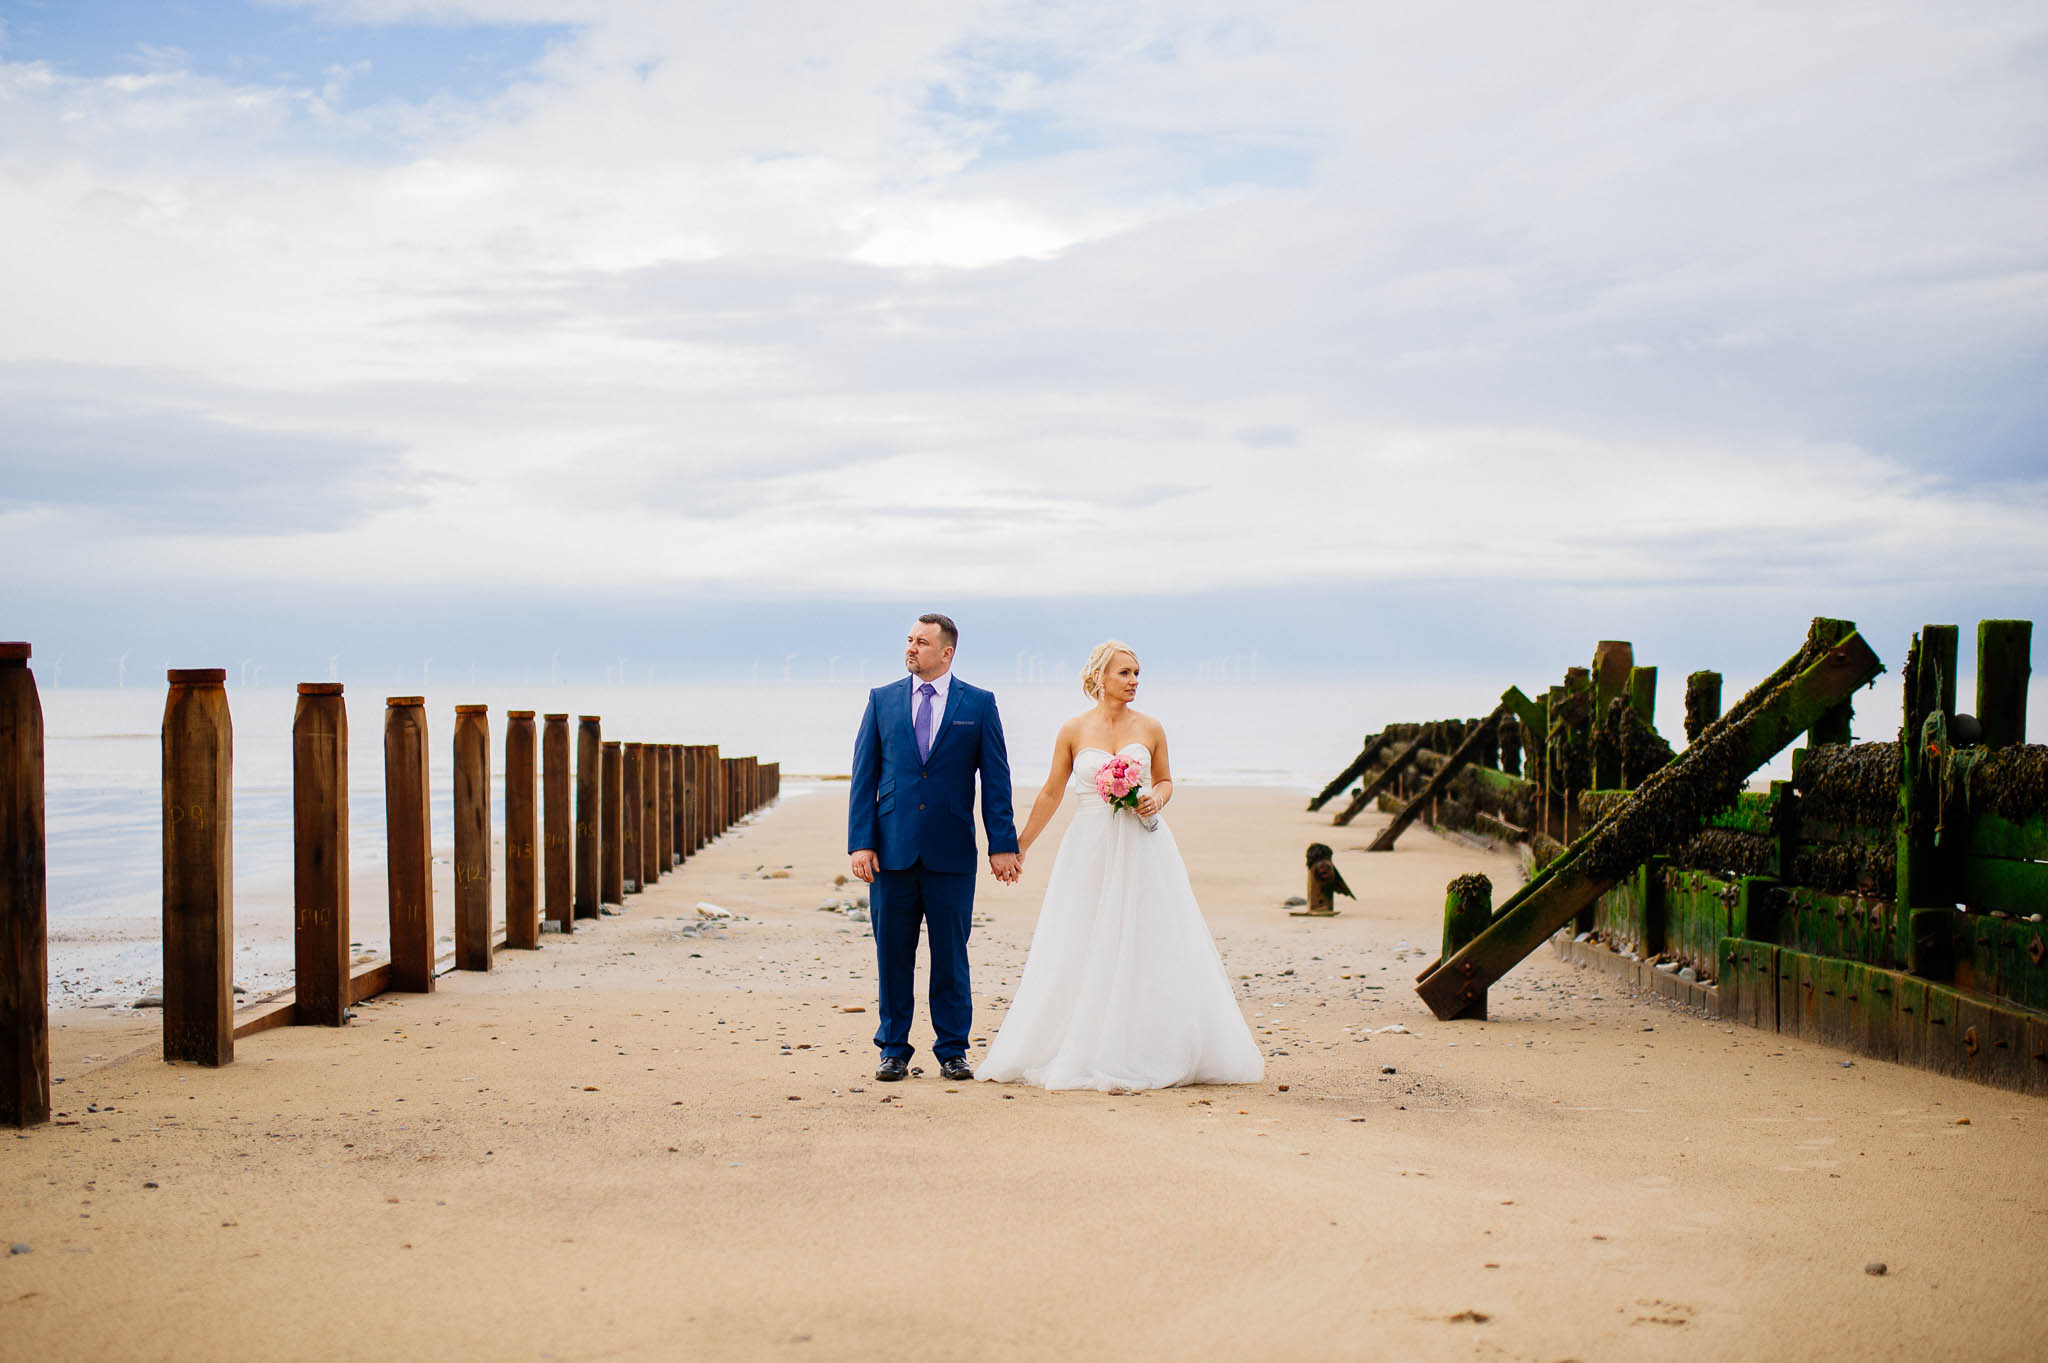 A newly married couple on a beach